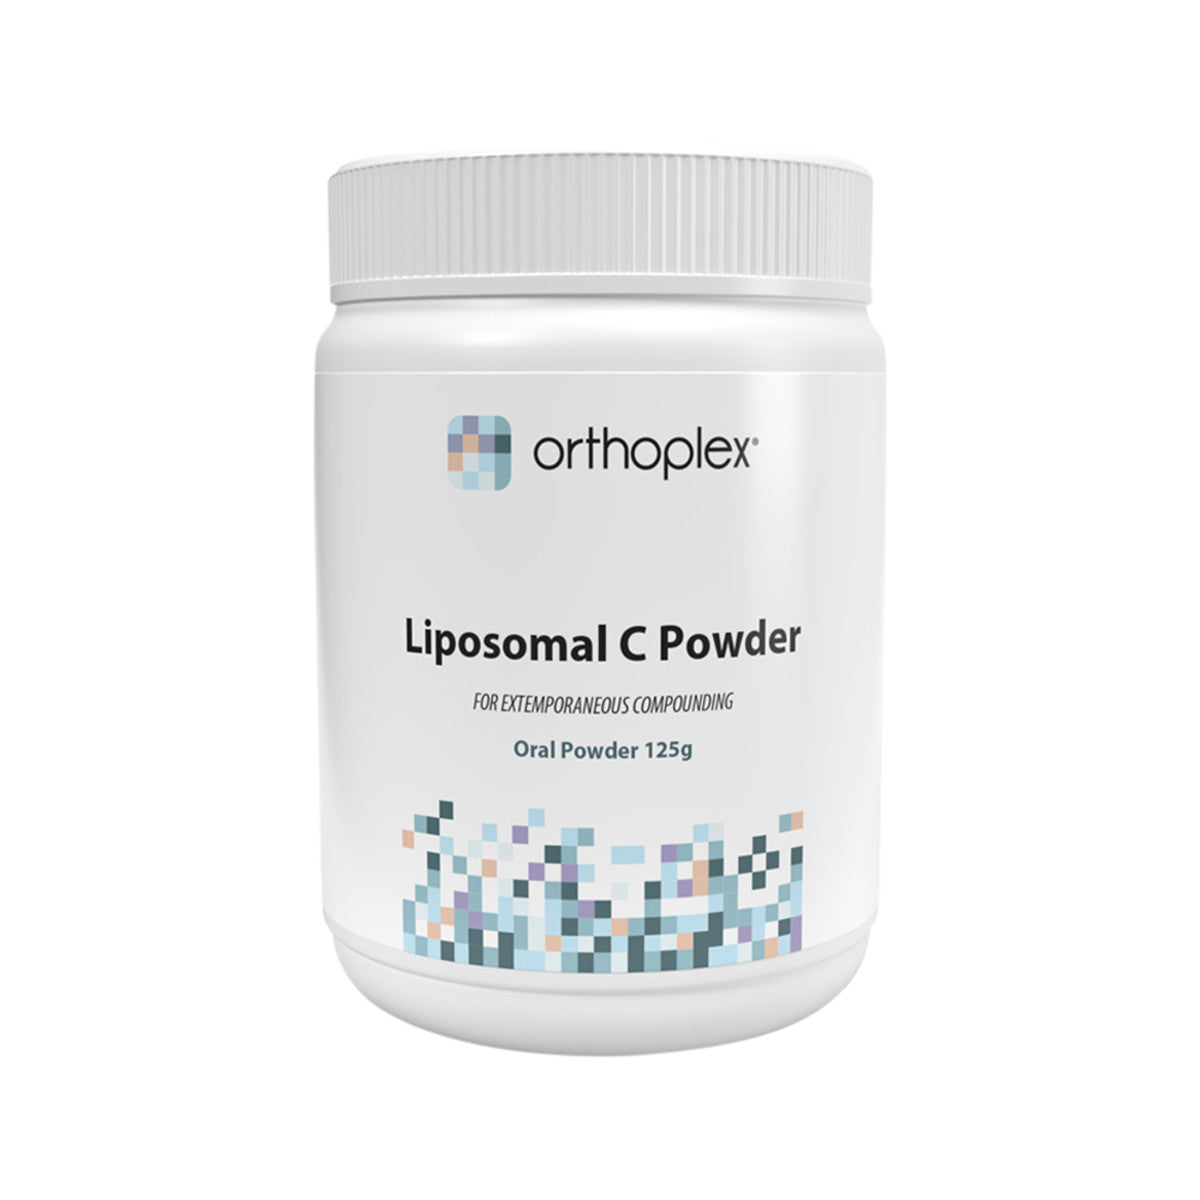 Orthoplex - Liposomal C Powder